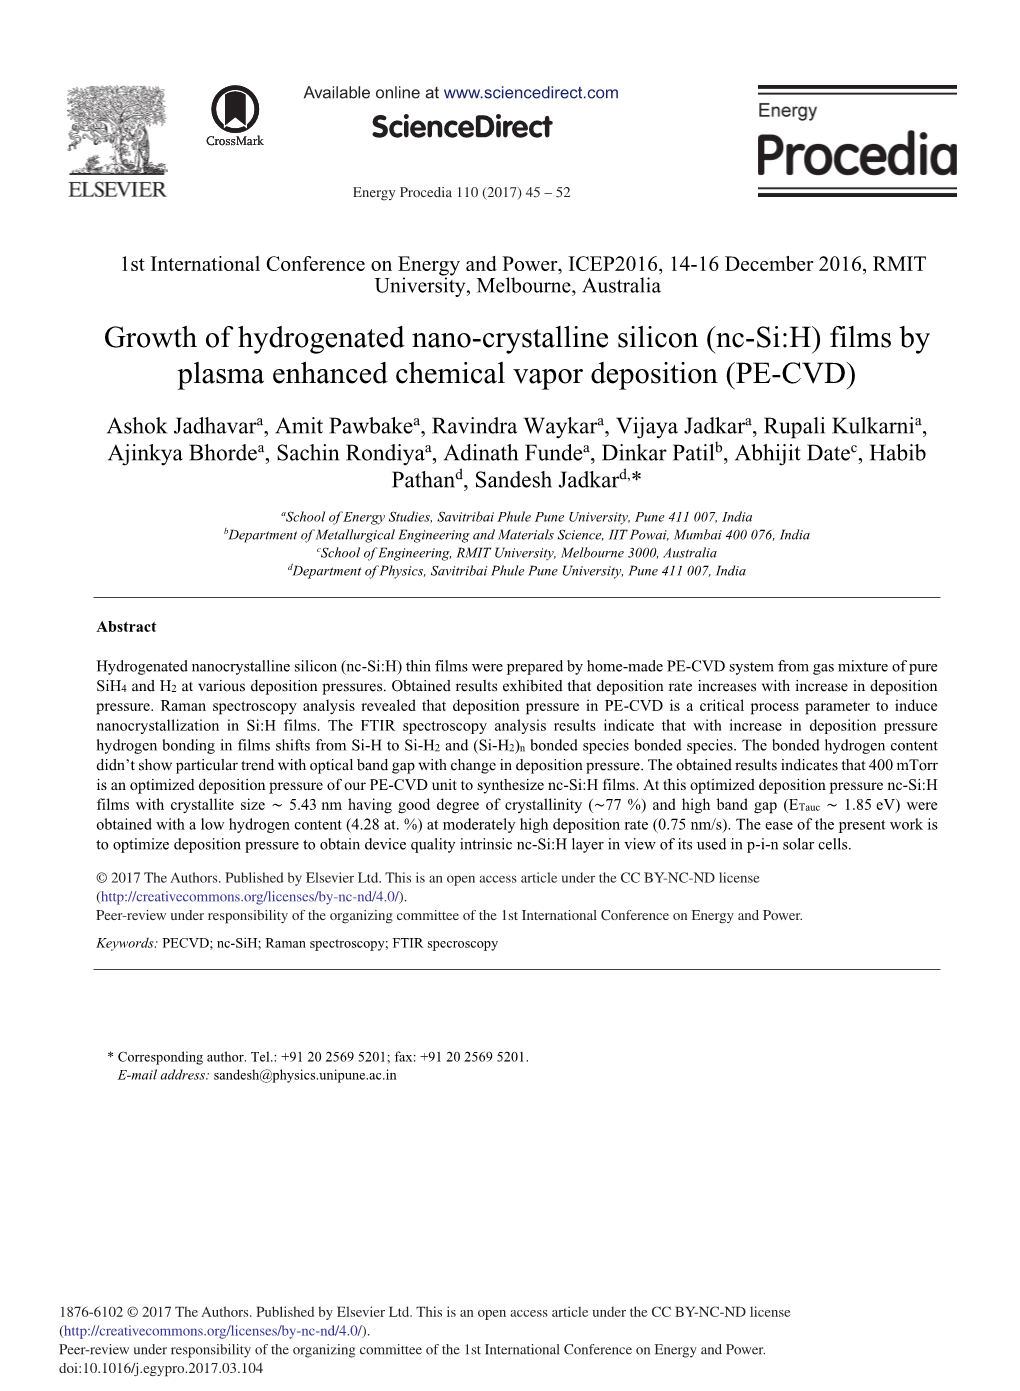 Nc-Si:H) Films by Plasma Enhanced Chemical Vapor Deposition (PE-CVD)